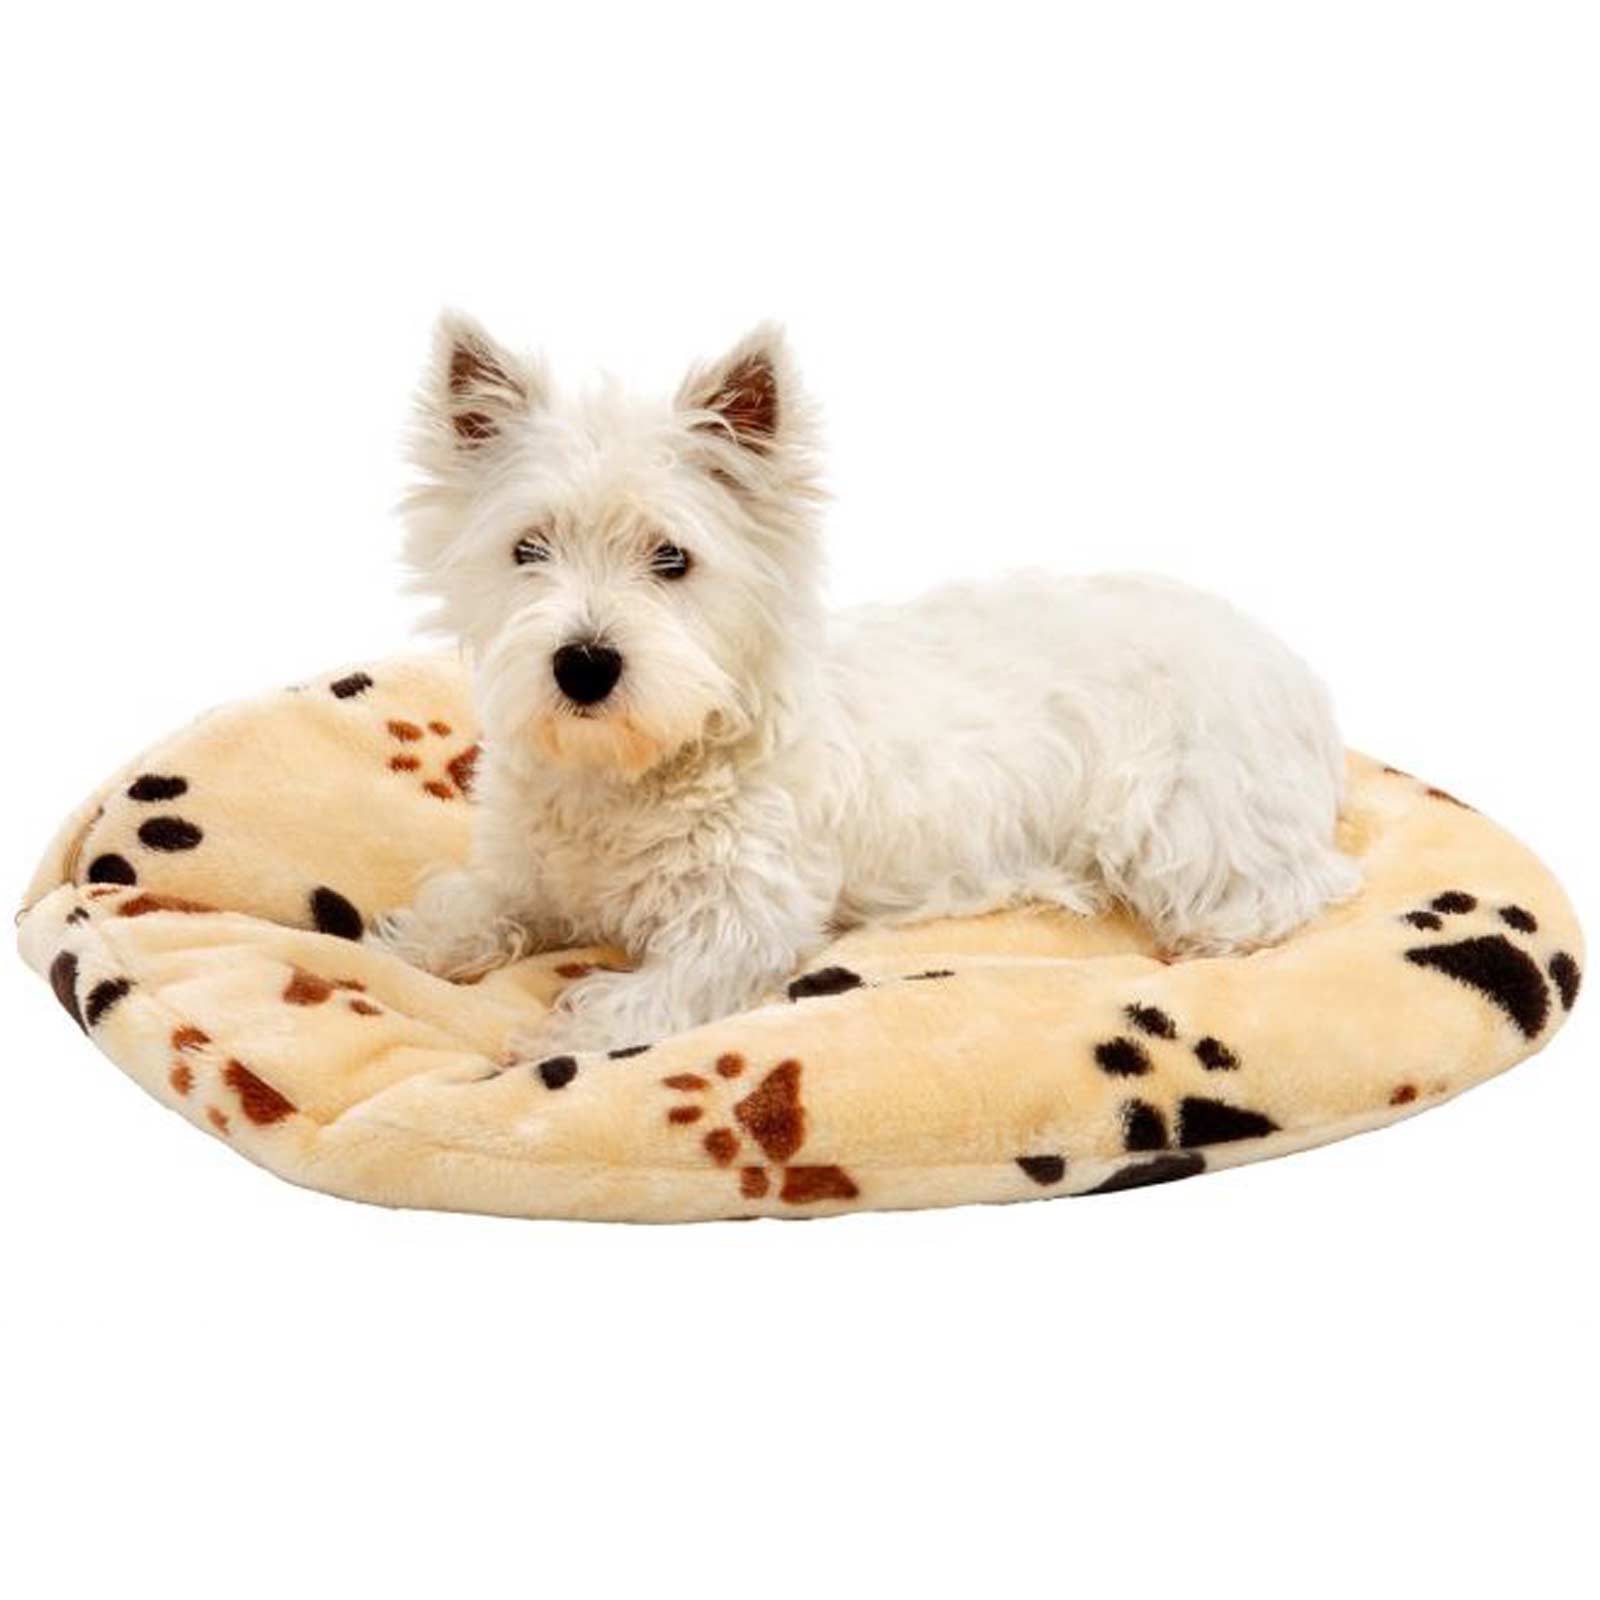 Dog cushion round track 80 x 62 x 4 cm beige